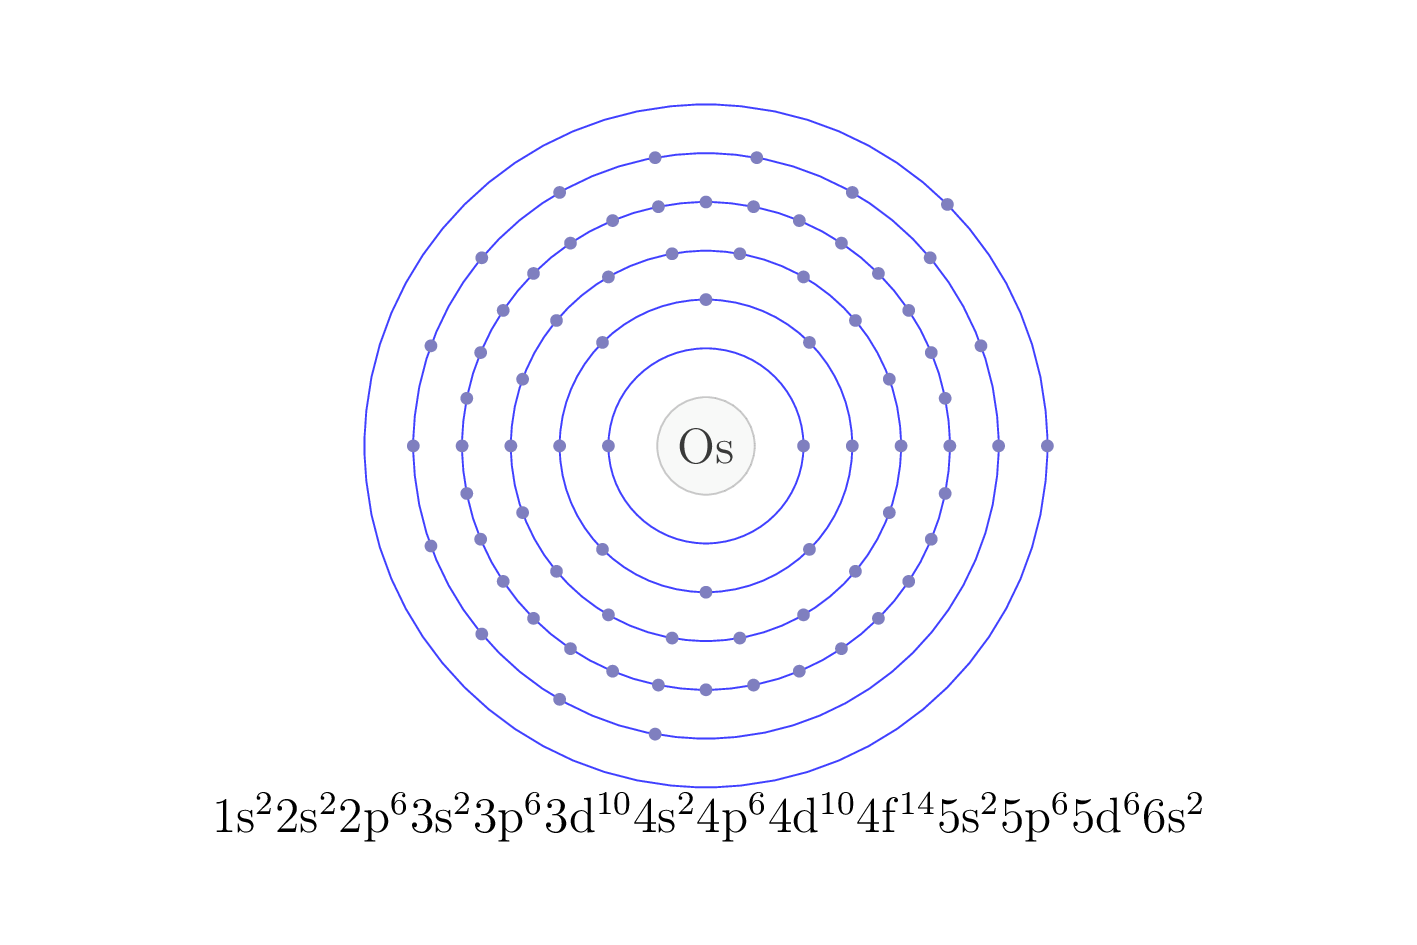 electron configuration of element Os